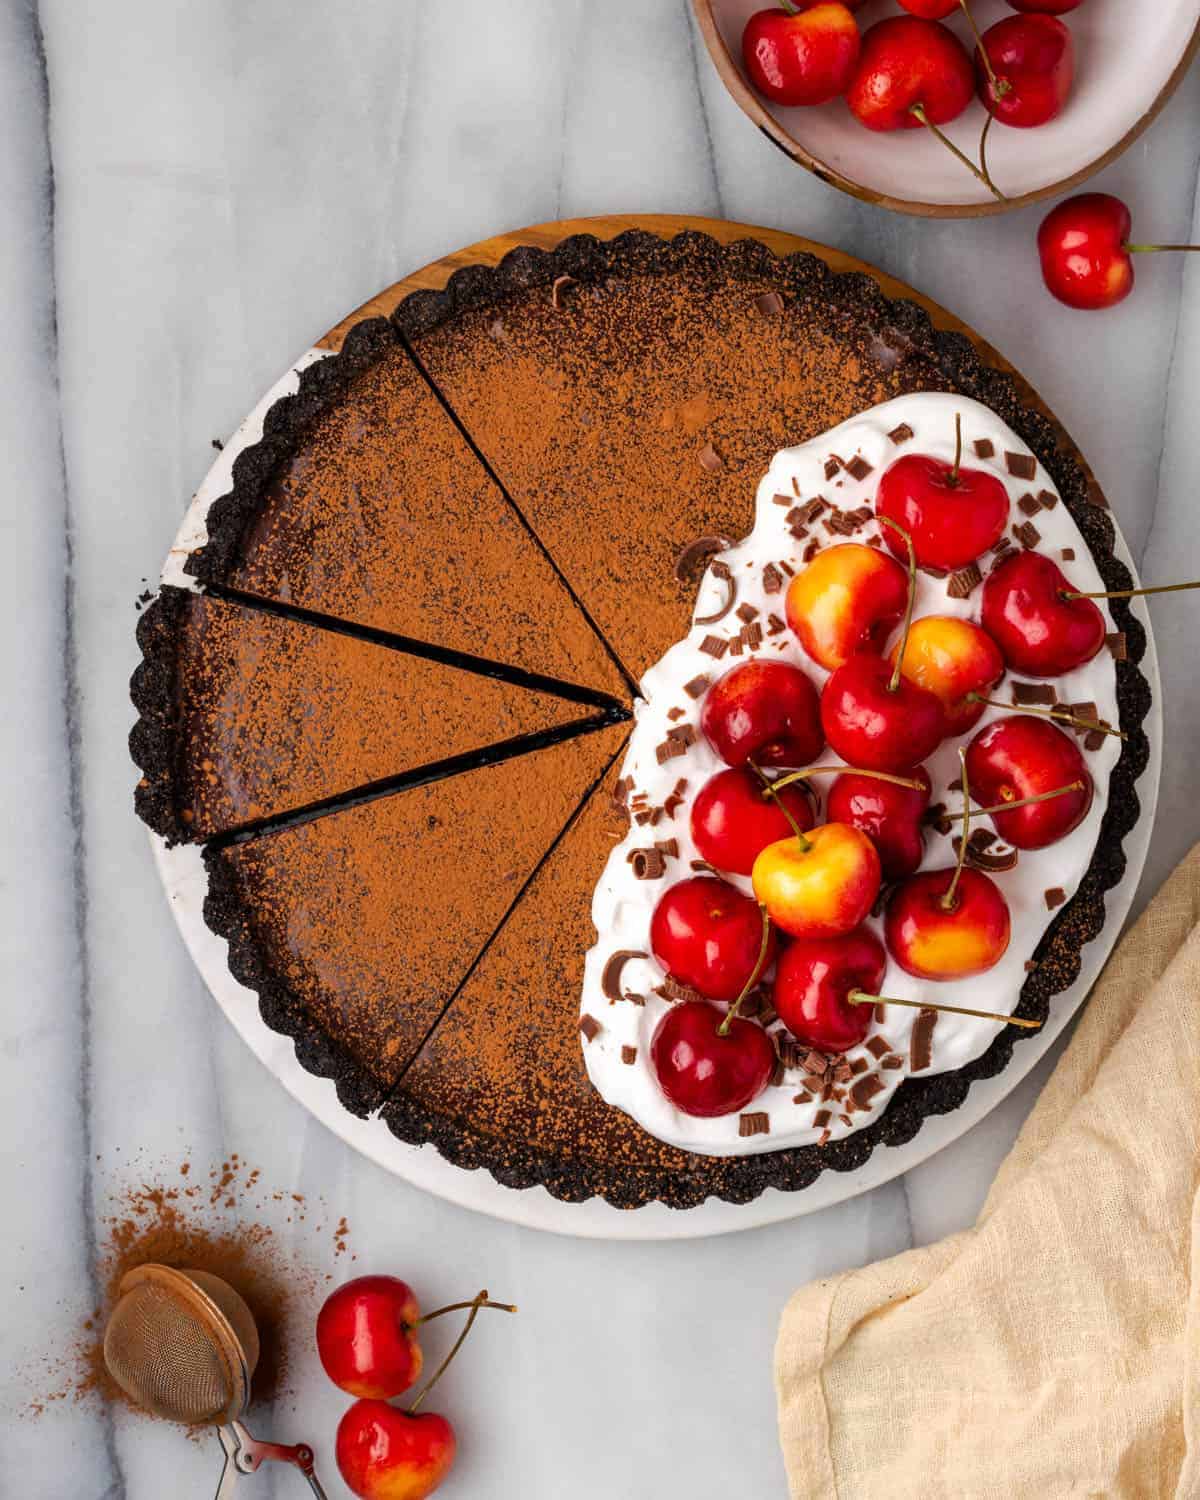 An easy gluten-free chocolate cherry tart with whipped cream and fresh cherries.